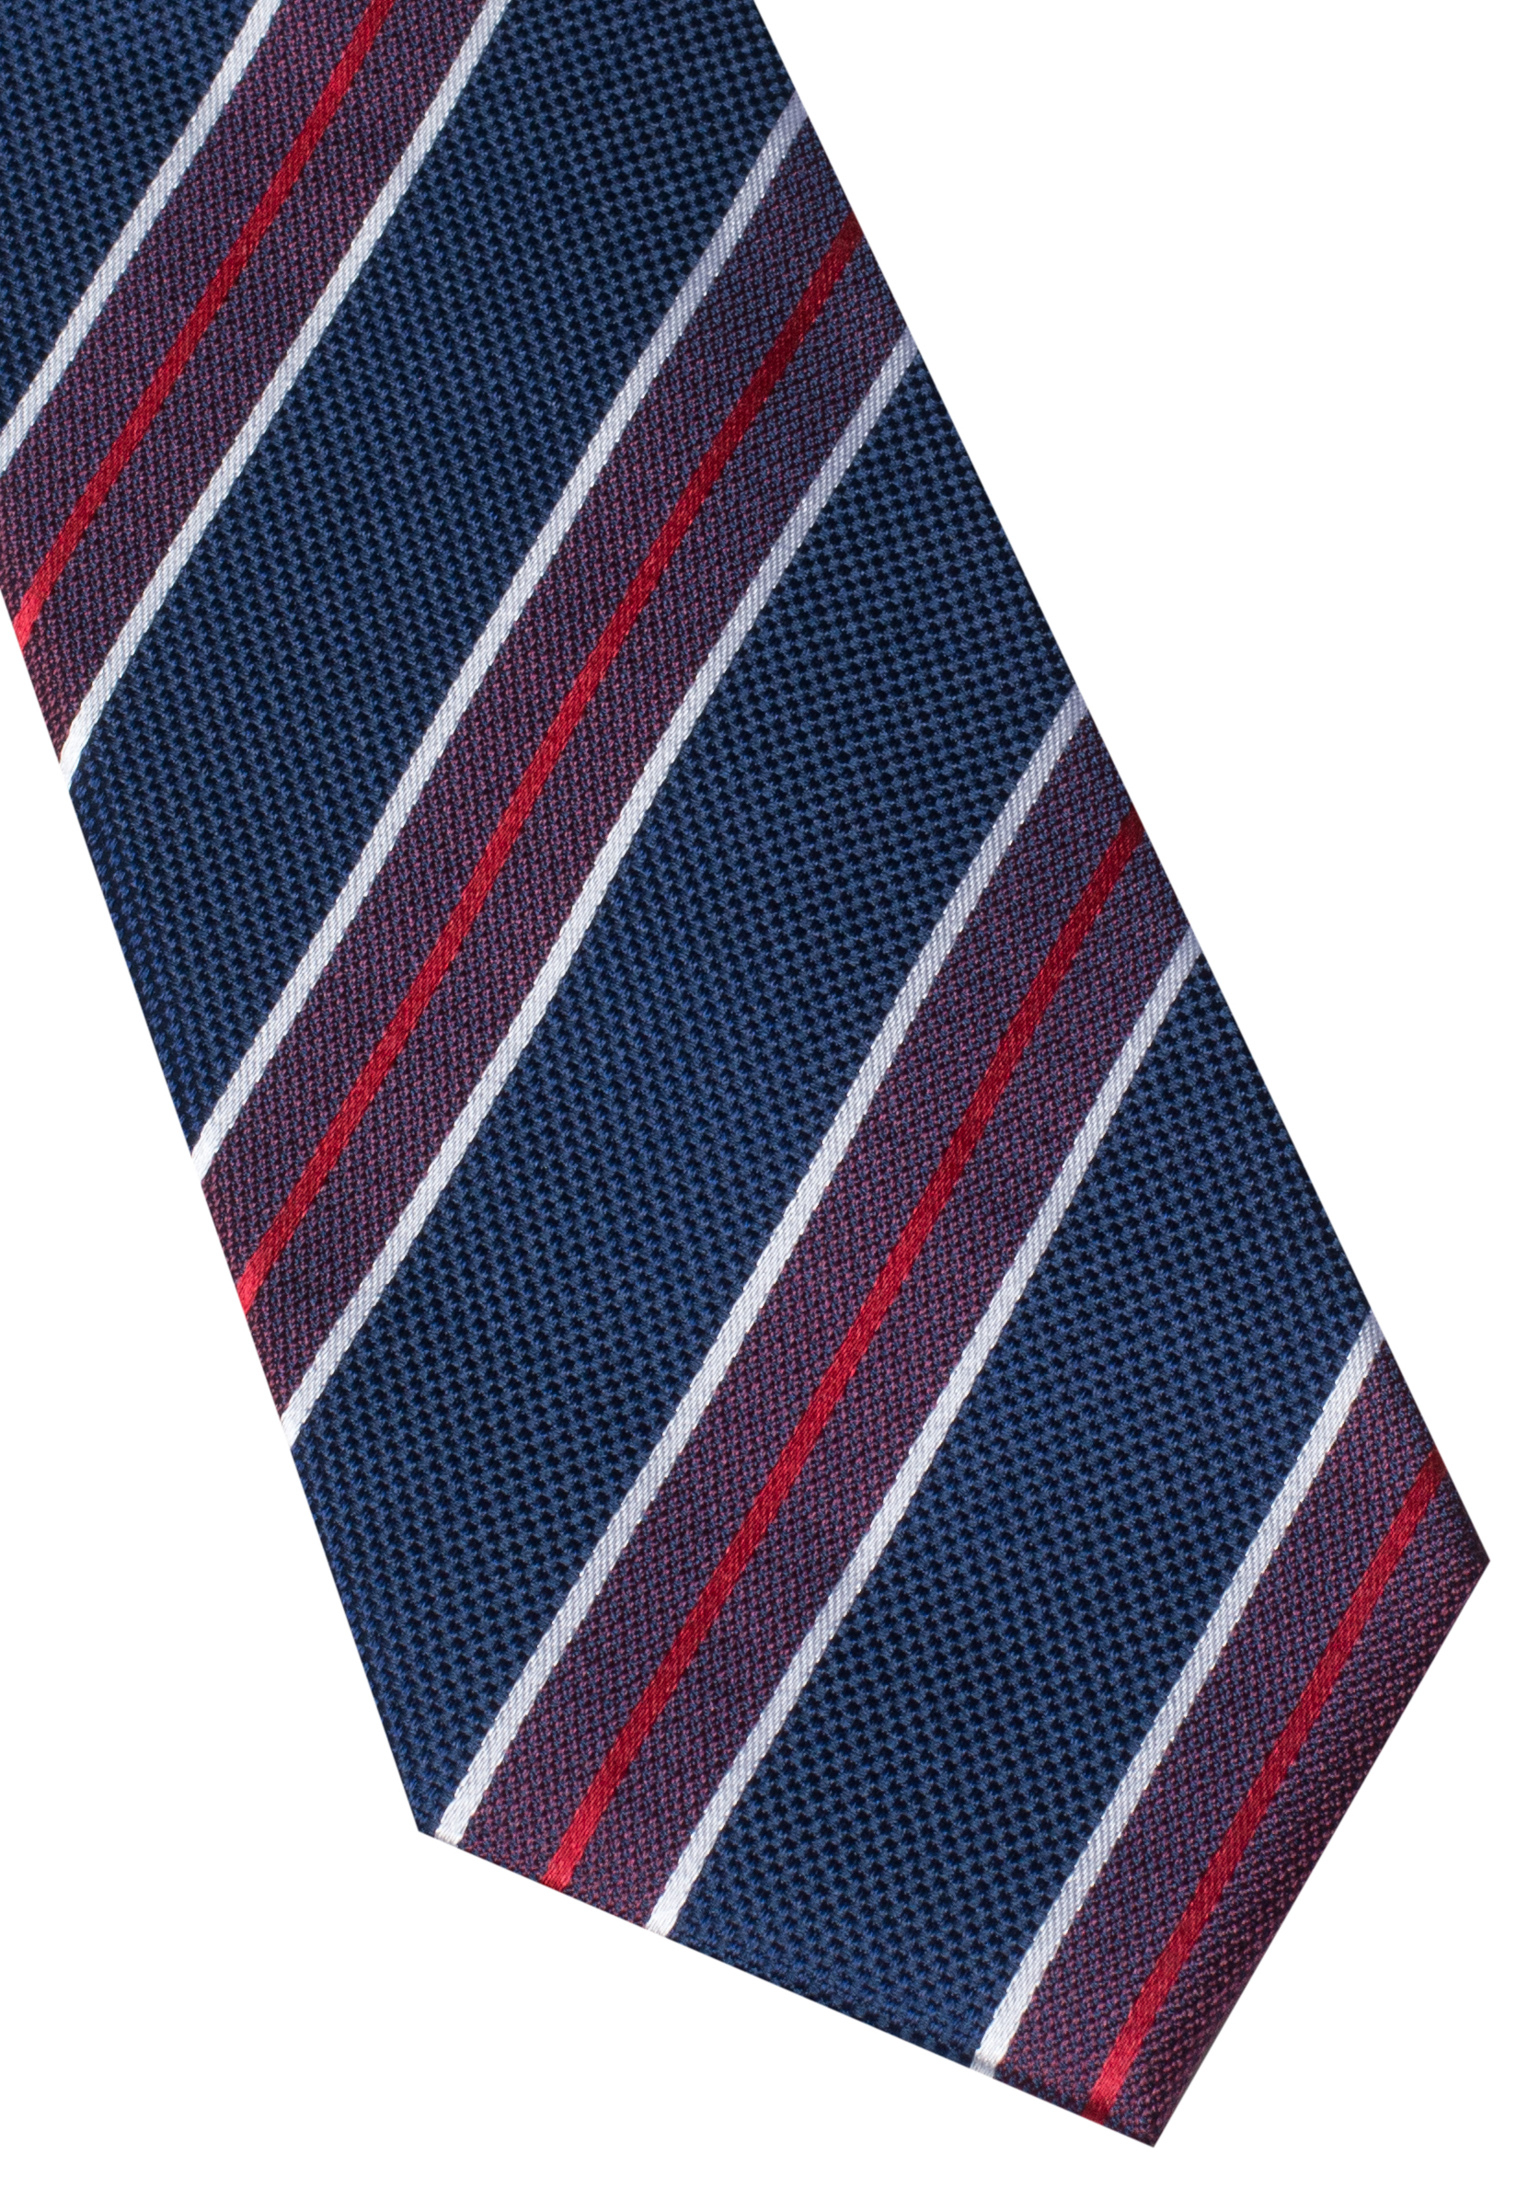 Cravate bleu marine/rouge rayé